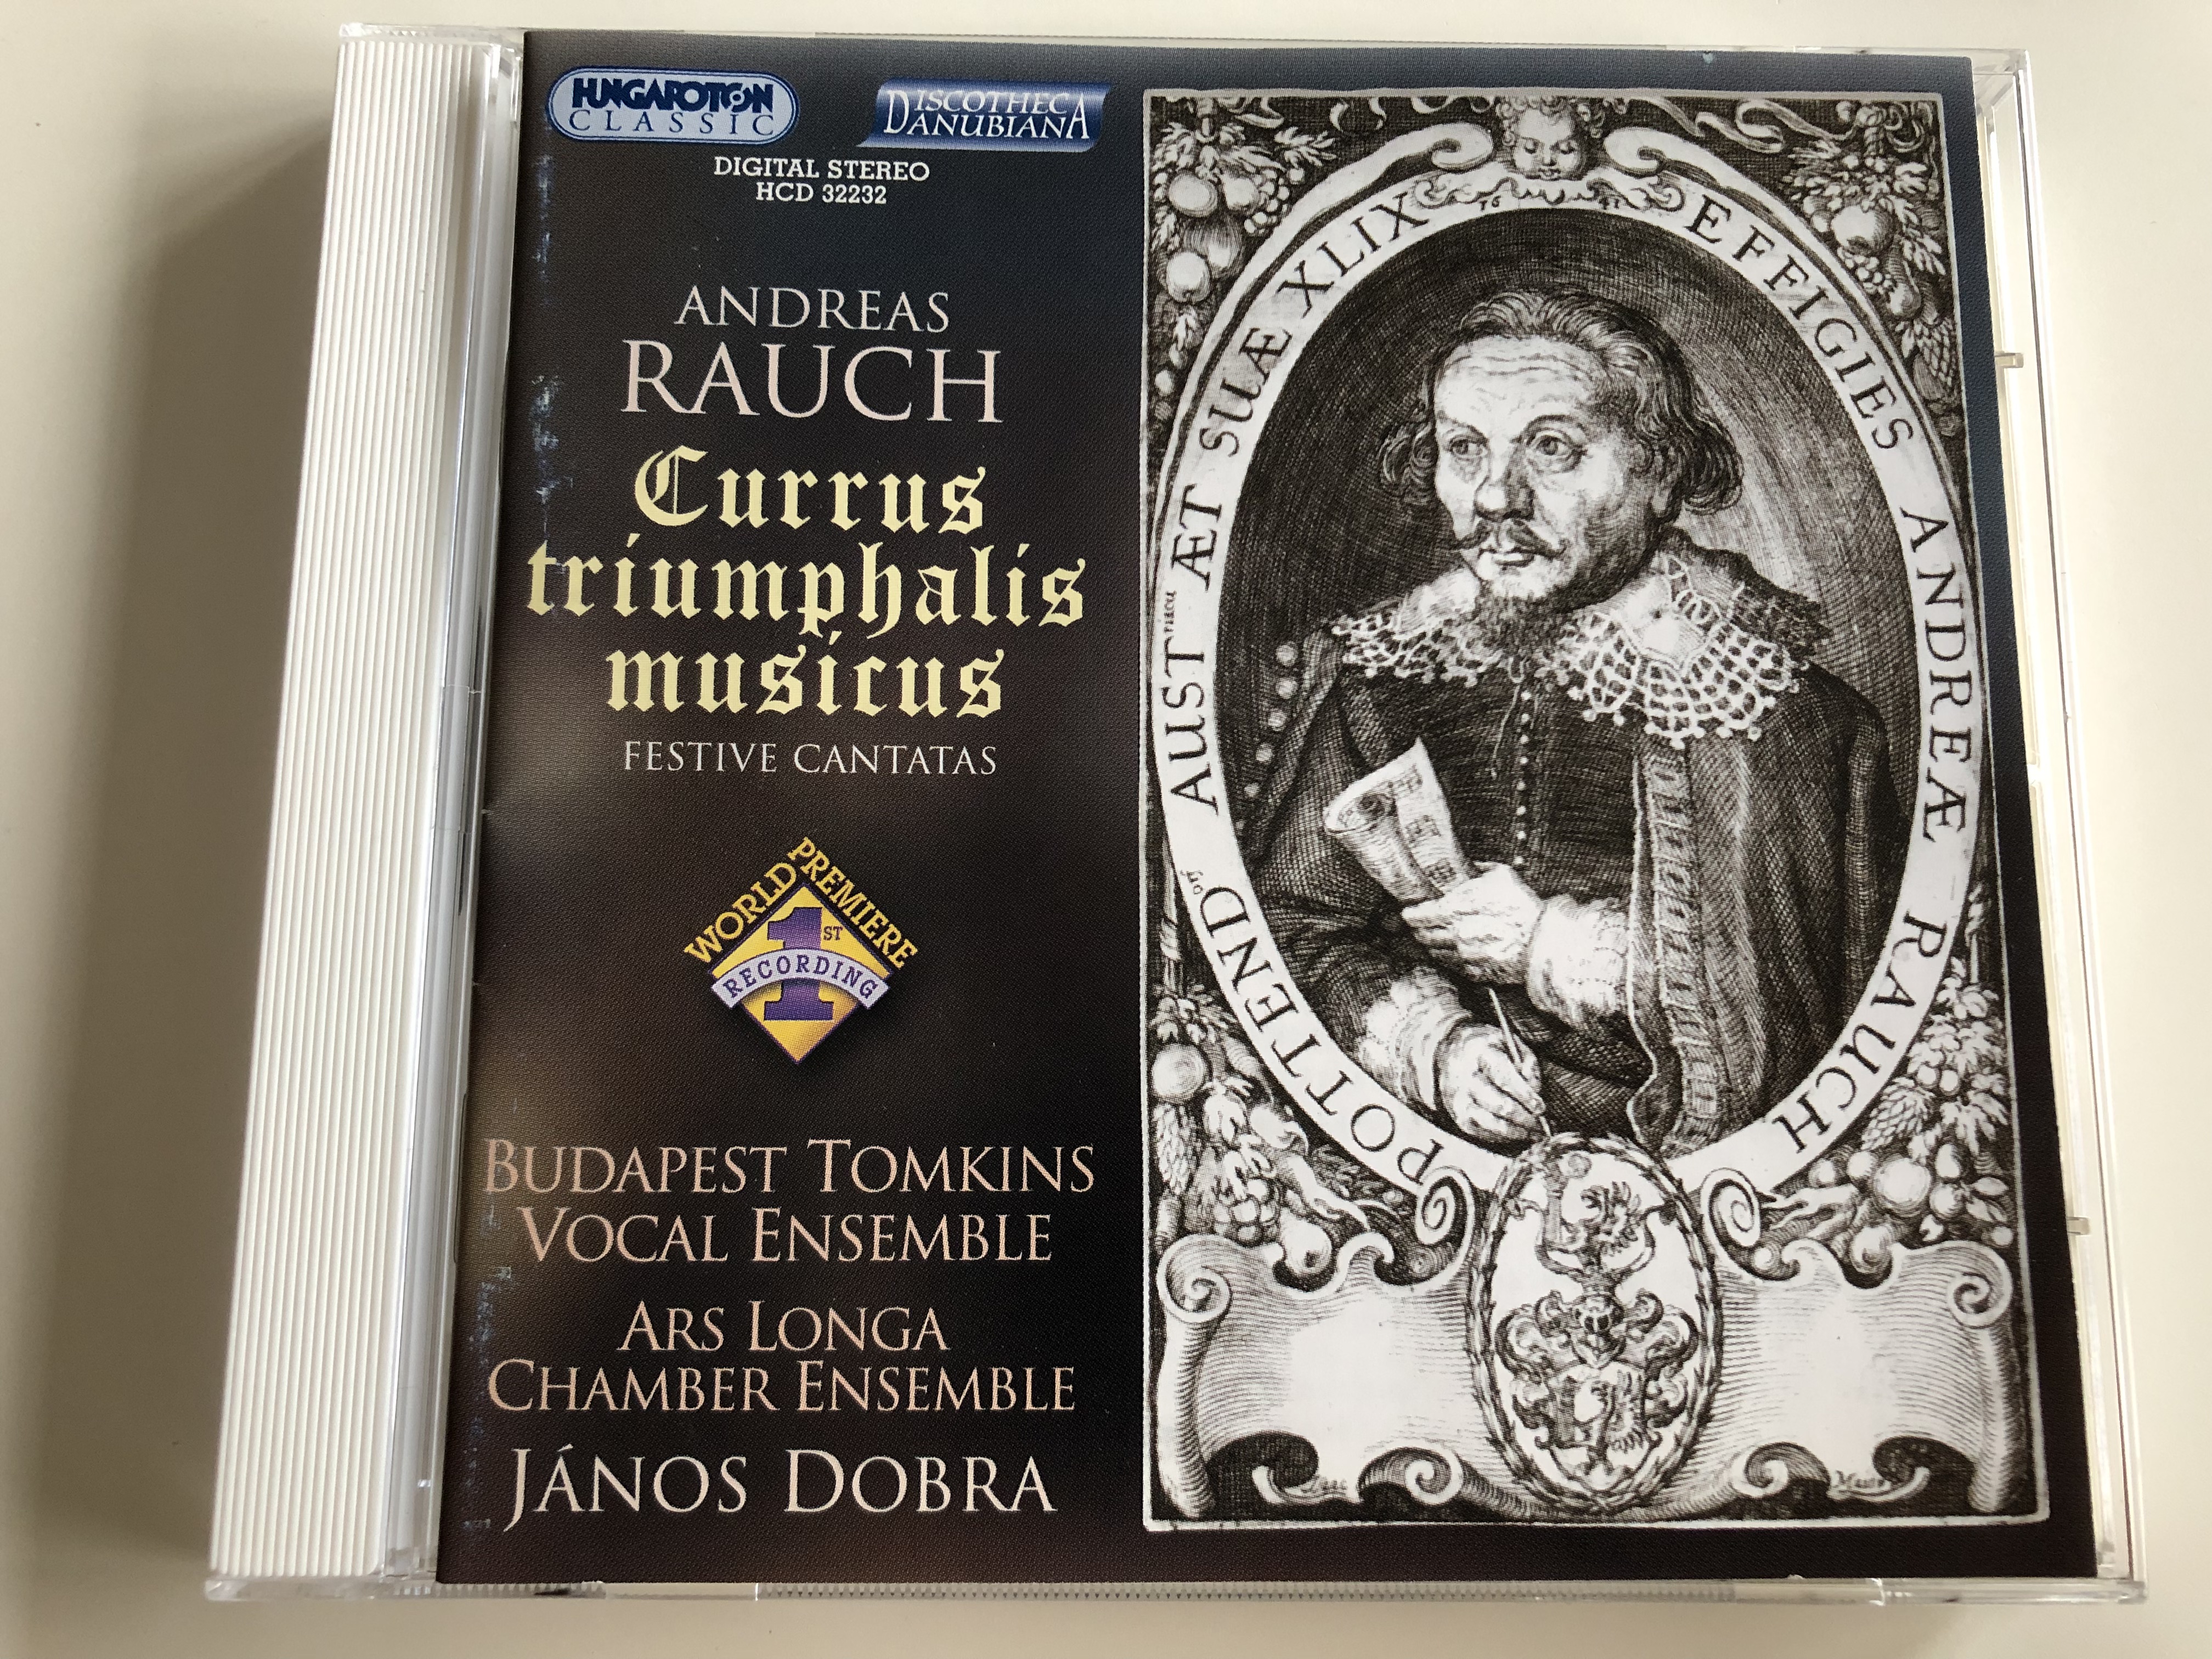 andreas-rauch-currus-triumphalis-musicus-festive-cantatas-audio-cd-2005-budapest-tomkins-vocal-ensemble-ars-longa-chamber-ensemble-conducted-by-j-nos-dobra-hungaroton-classic-hcd-32232-1-.jpg